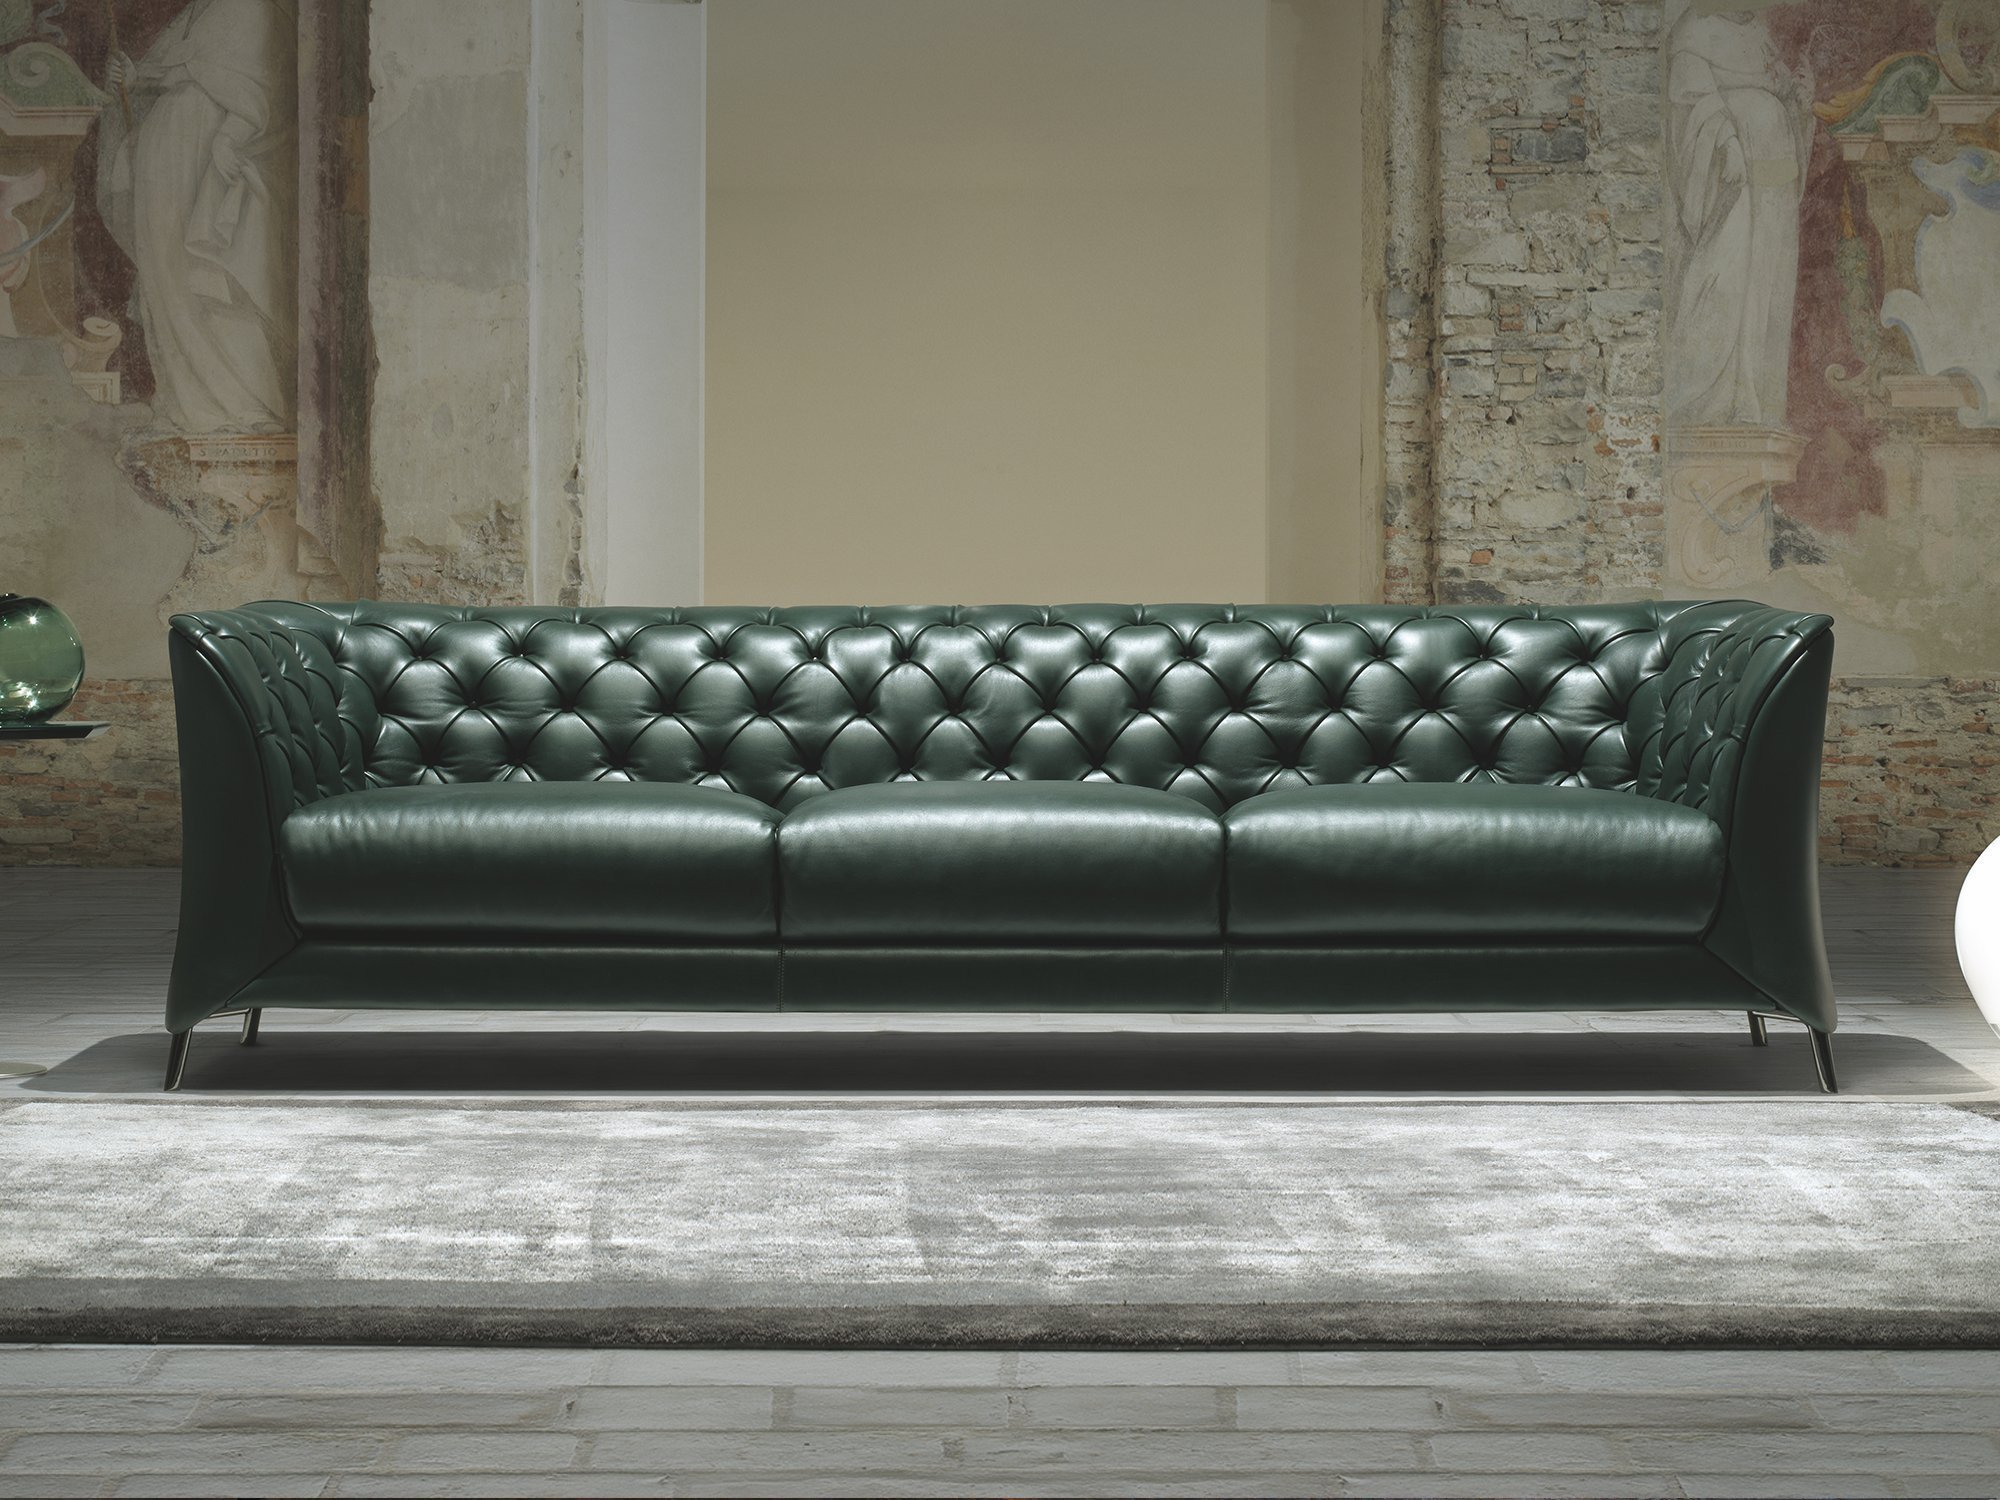 Sofa living room Natuzzi furniture Cyprus Nicosia Takis Angelides Furnihome